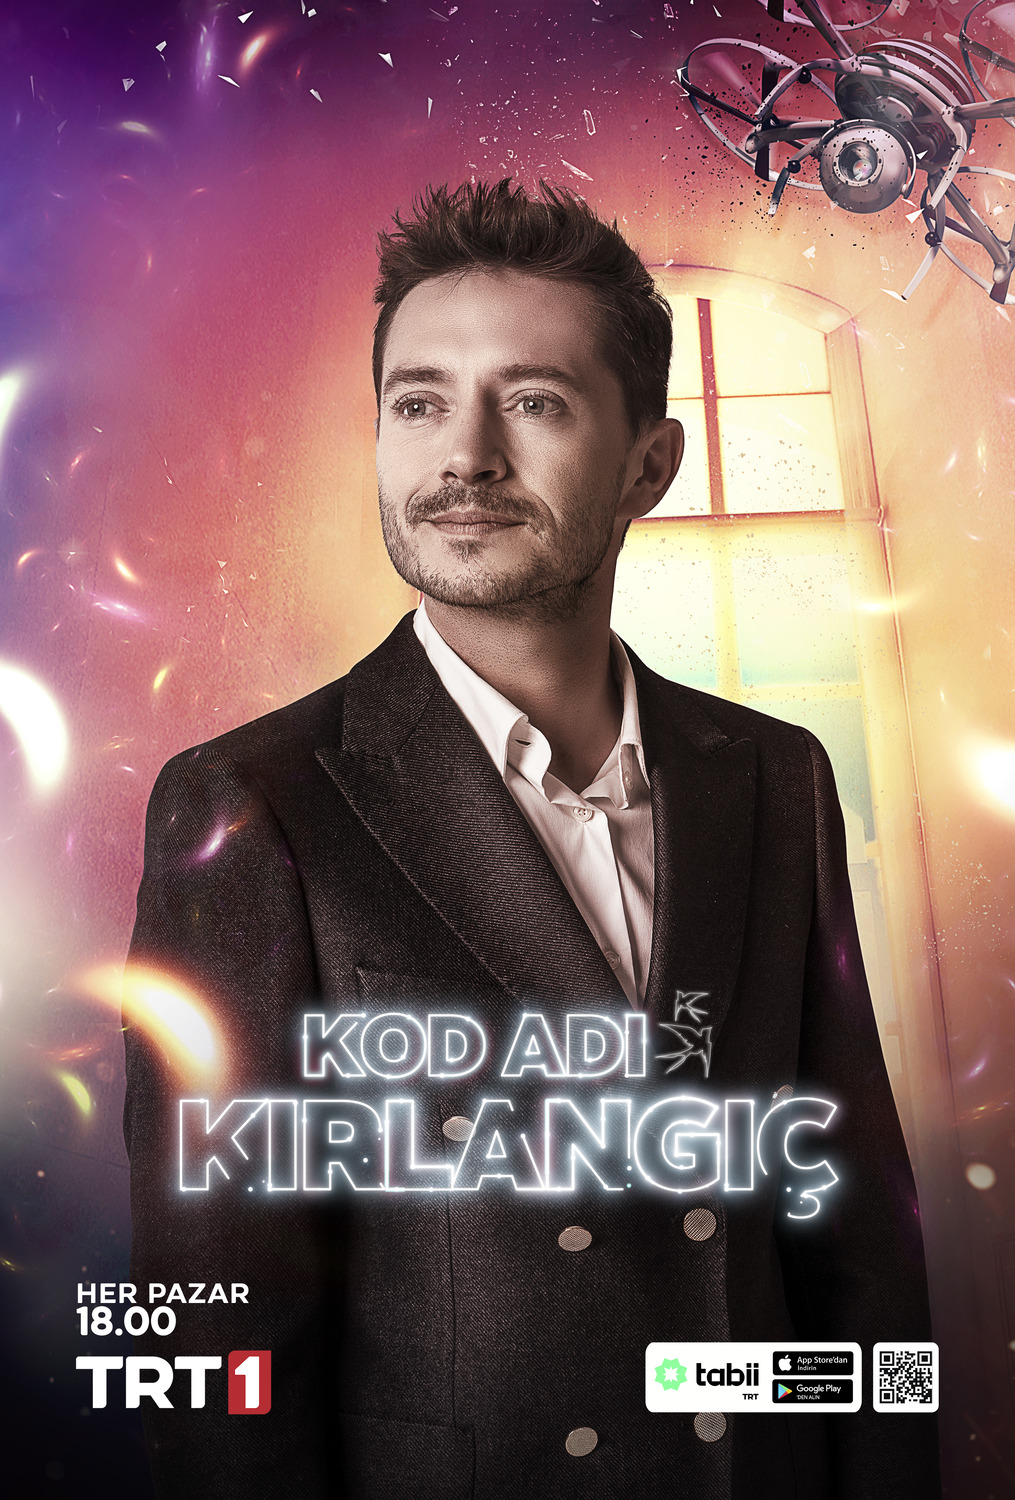 Extra Large TV Poster Image for Kod Adı Kırlangıç (#9 of 11)